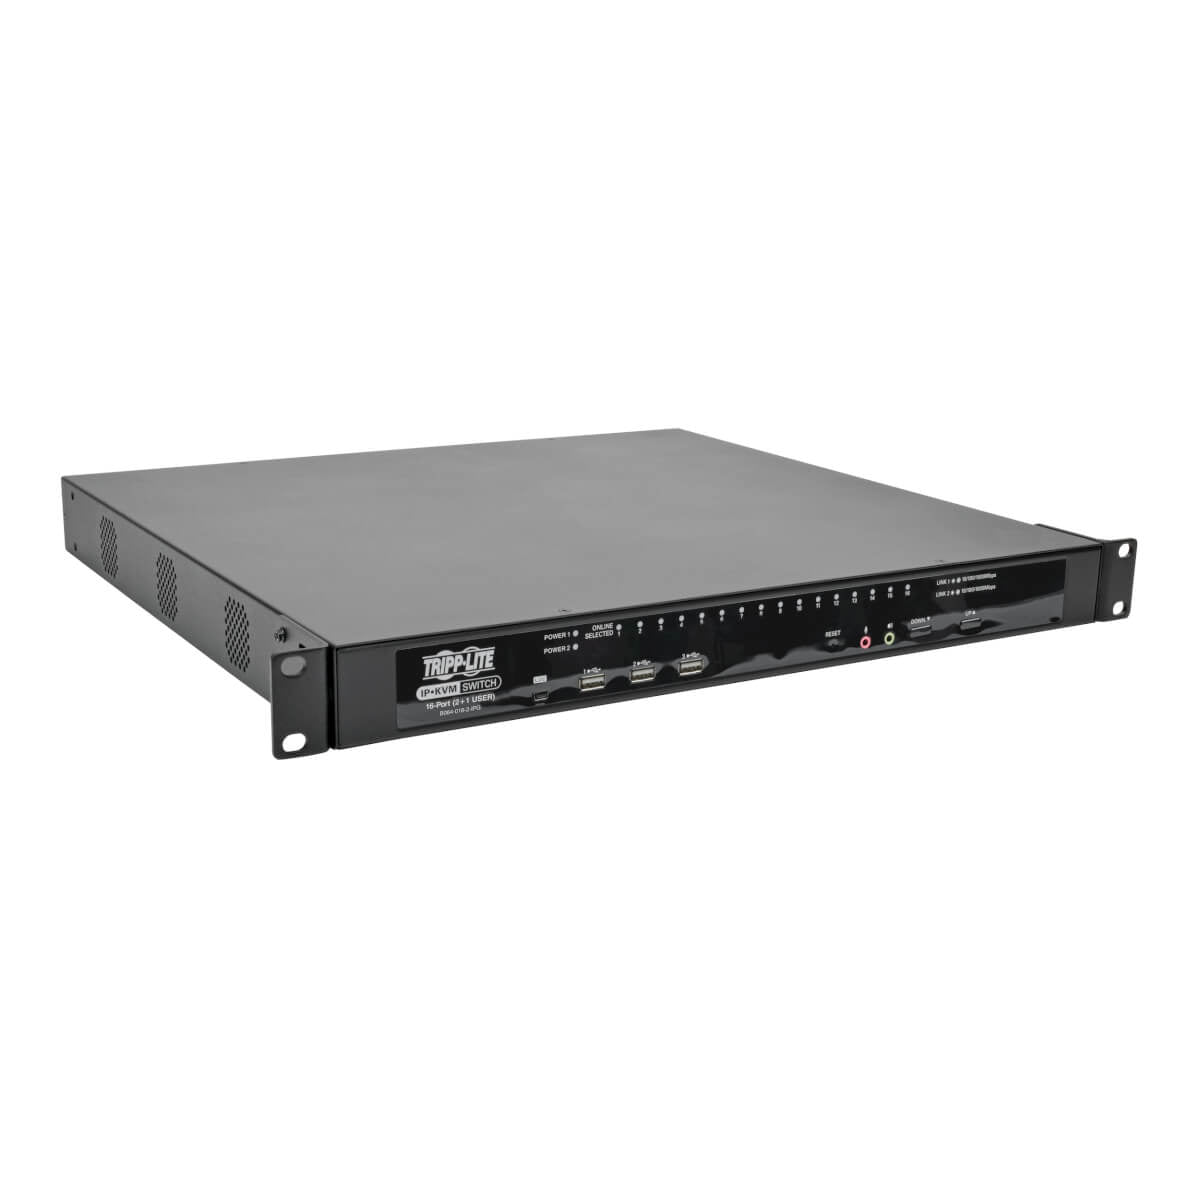 Tripp Lite B064-016-02-Ipg Netdirector 16-Port Cat5 Kvm Over Ip Switch - Virtual Media, 2 Remote + 1 Local User, 1U Rack-Mount, Taa